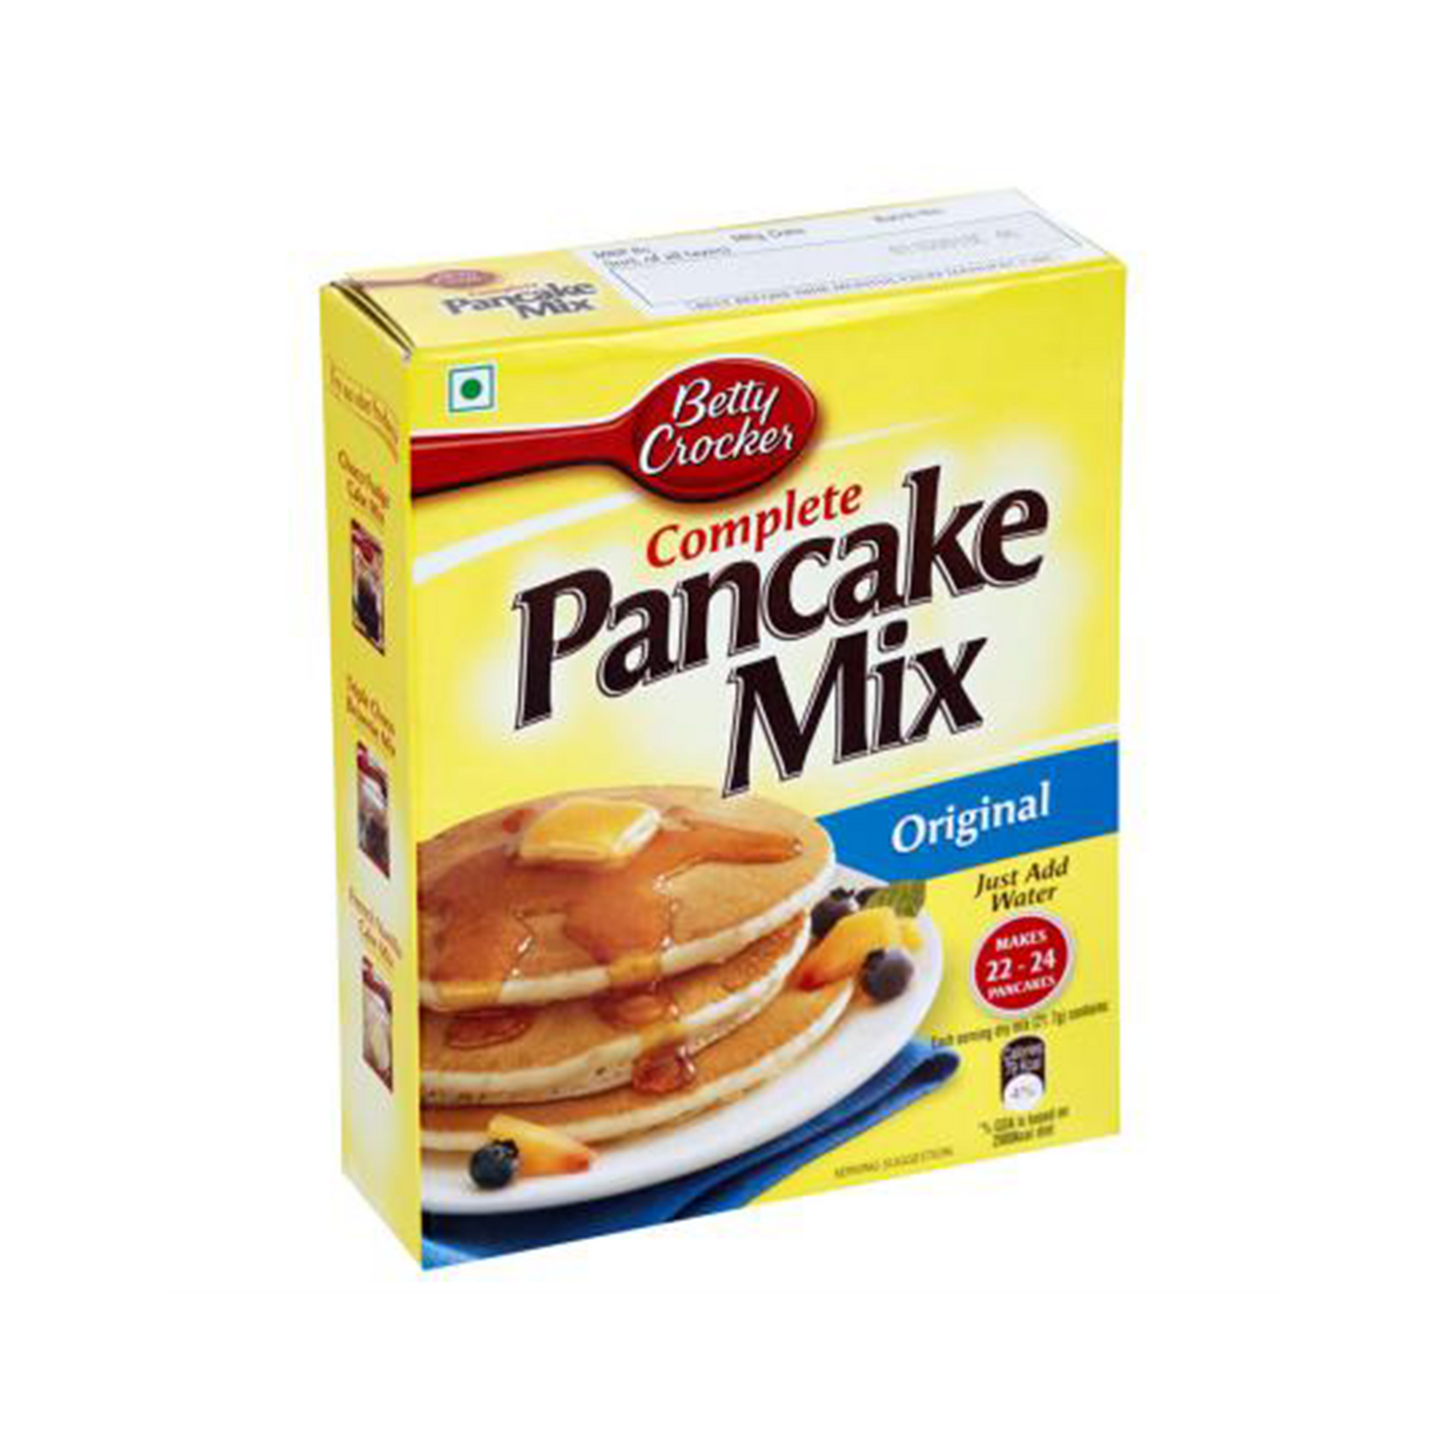 Betty Crocker Pancake Mix - Original.